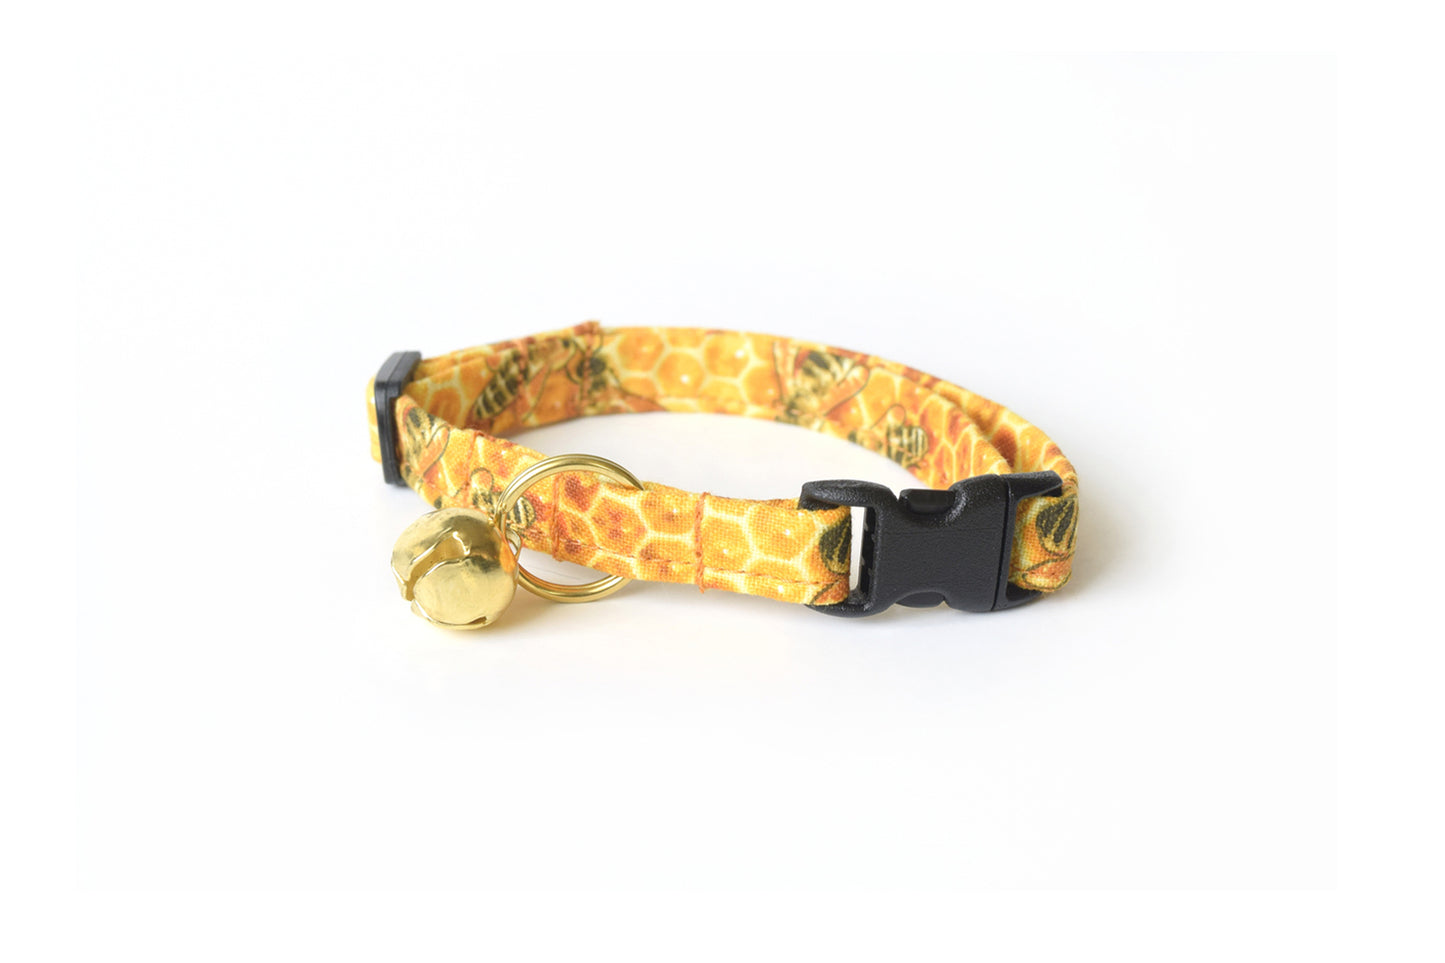 Gold Honeycomb Cat Collar - Golden Yellow Honey Comb with Bees - Breakaway Cat Collar - Handmade by Kira's Pet Shop